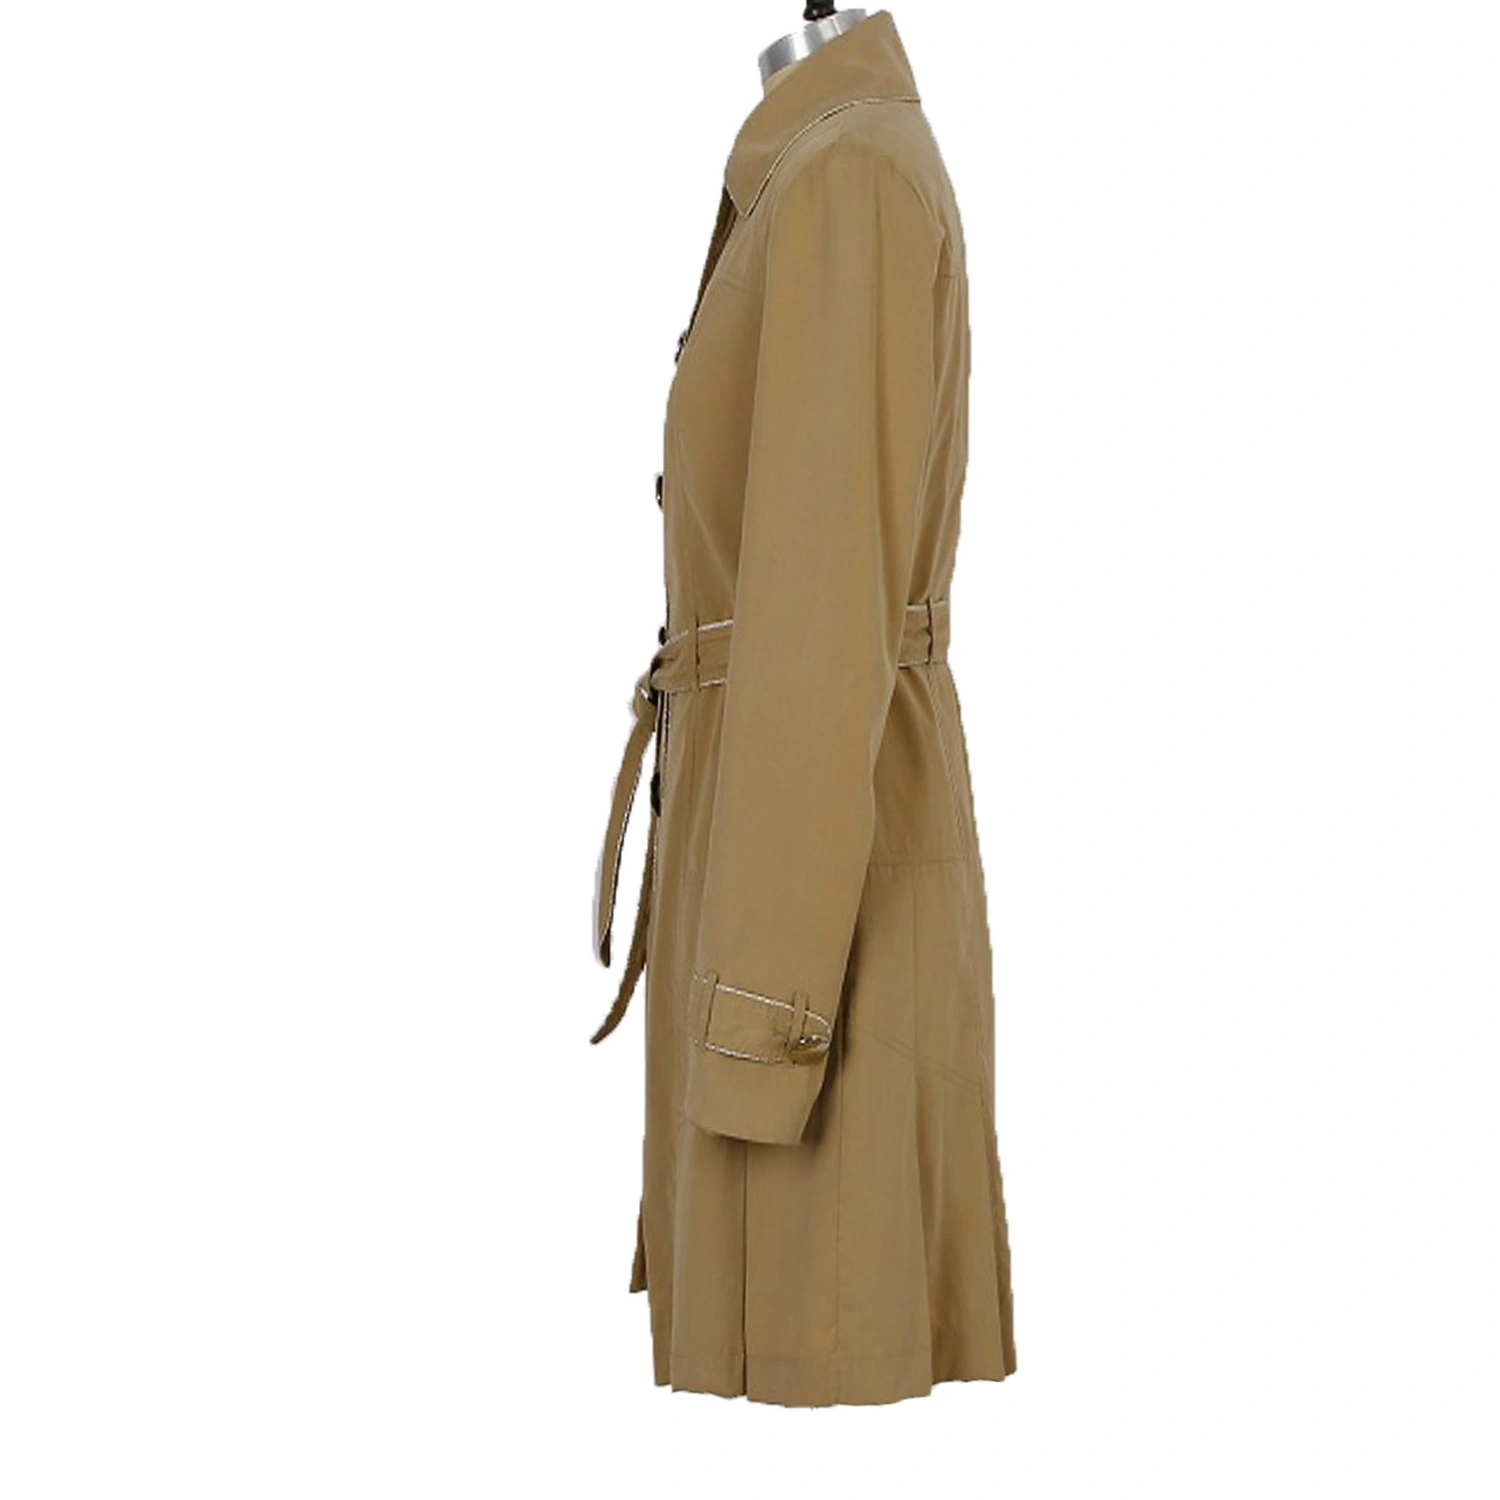 New-Design-High-Quality-Fashion-Peached-Woman-s-Coat.webp (1).jpg